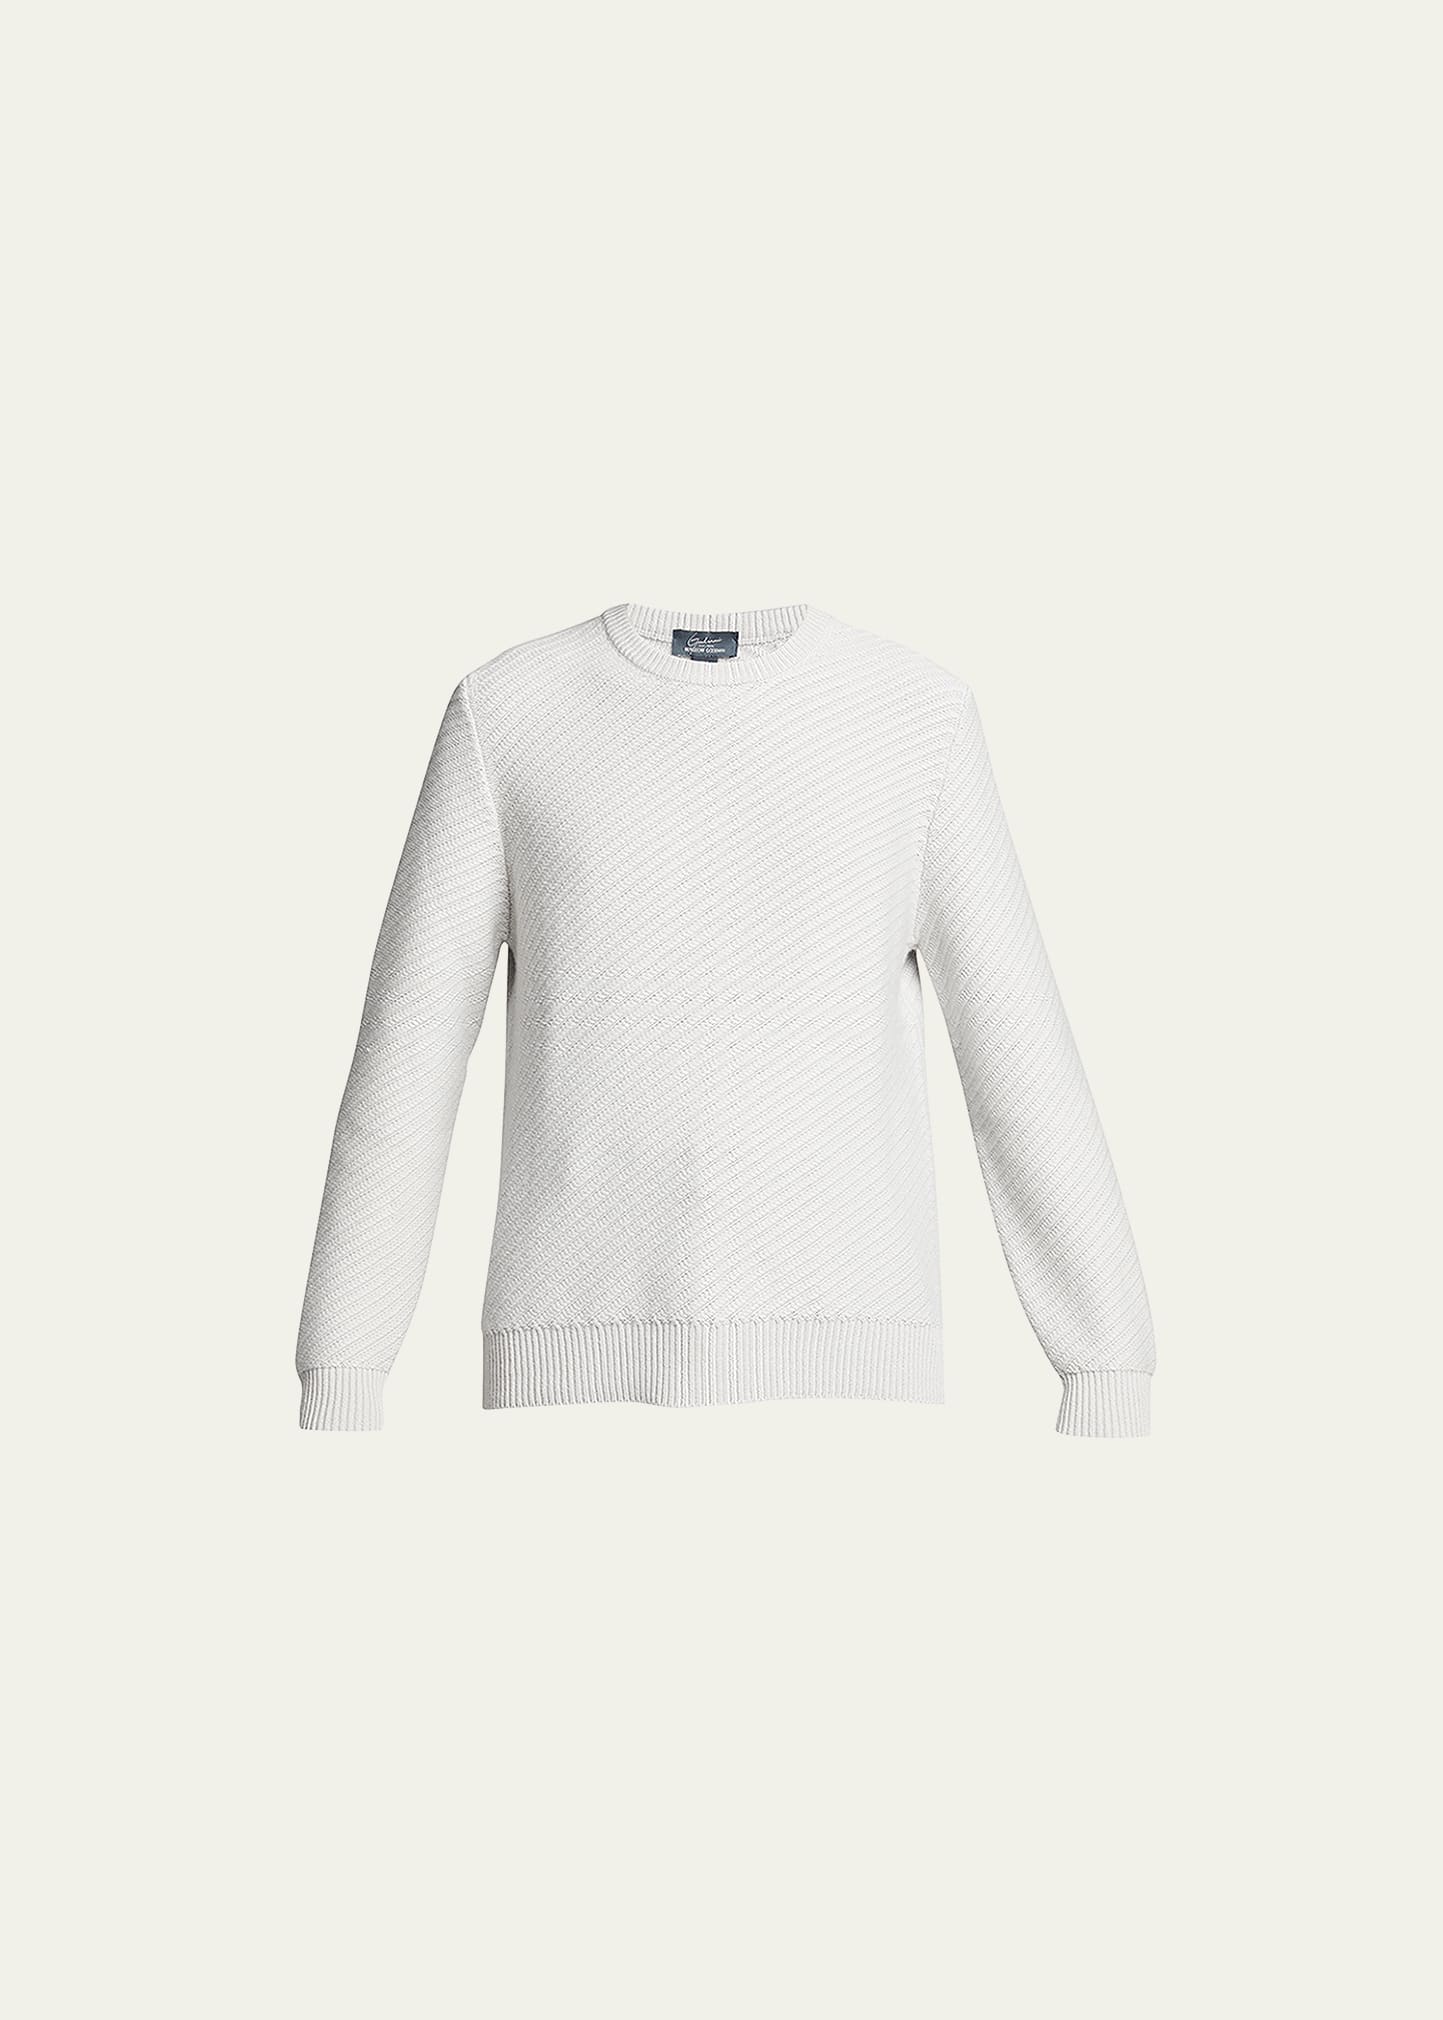 Goodman's Men's Cashmere Diagonal Stitch Sweater